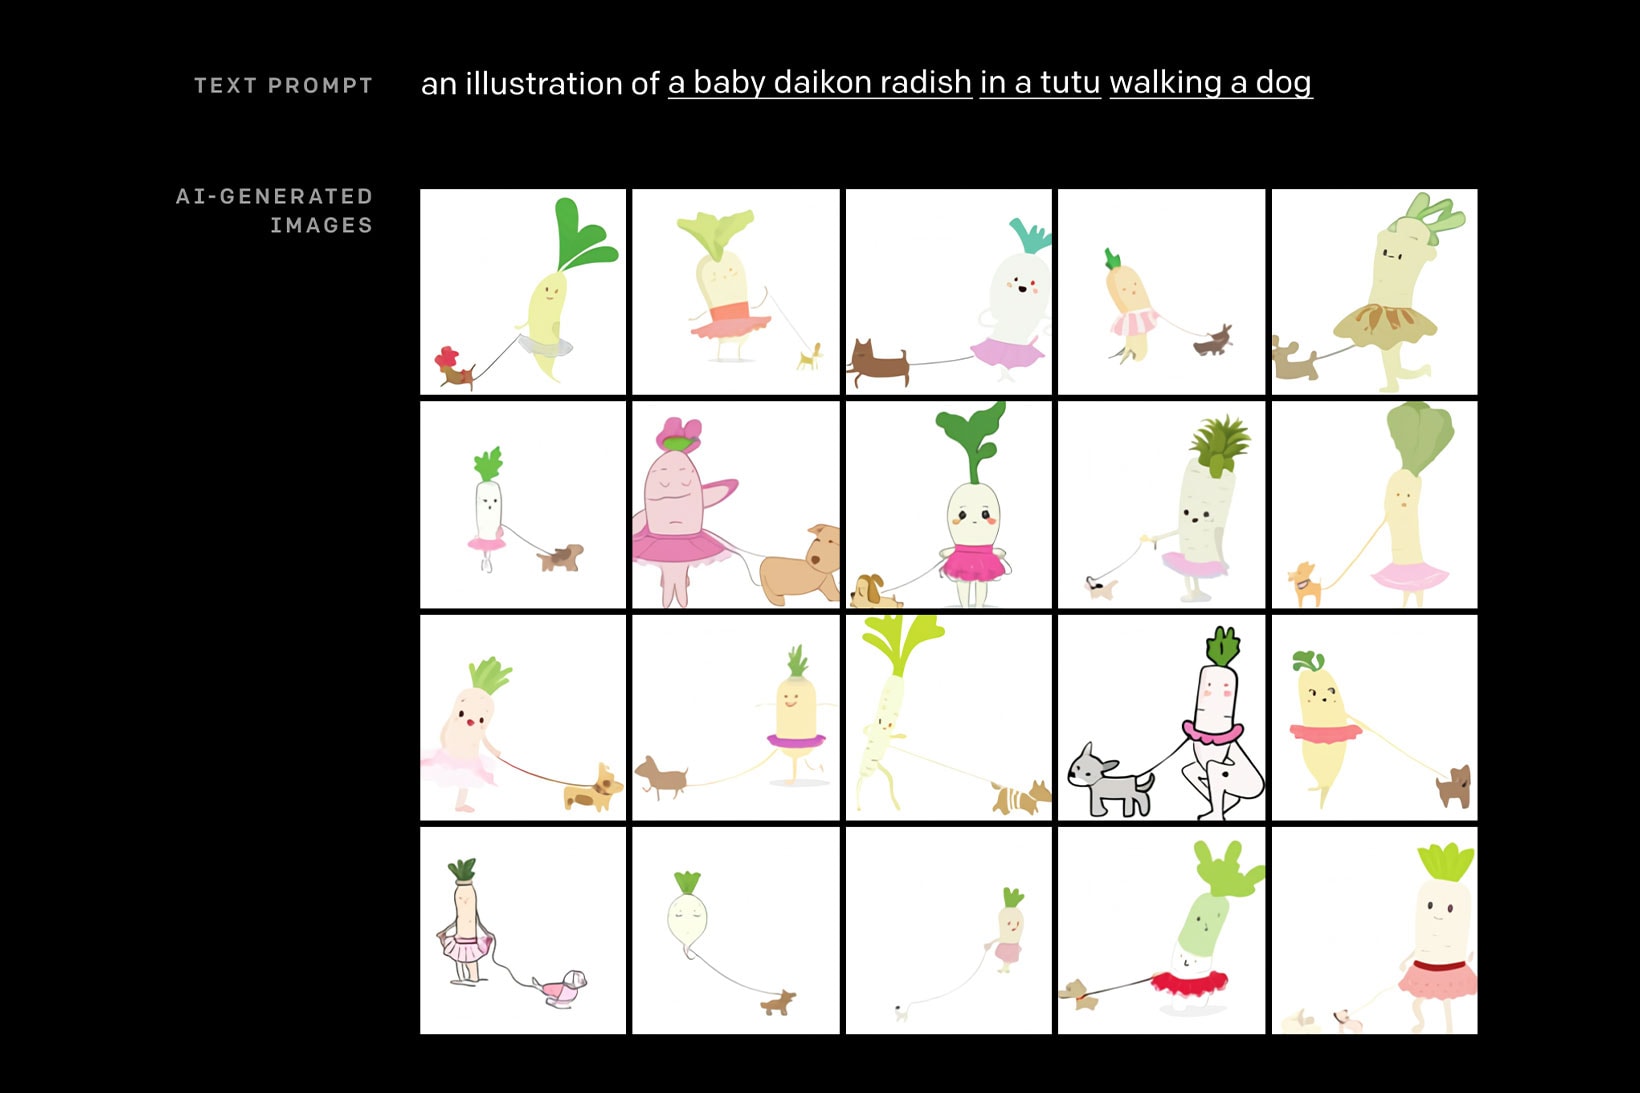 artificial intelligence openai technology dall e text description to image baby daikon radish in a tutu walking a dog 